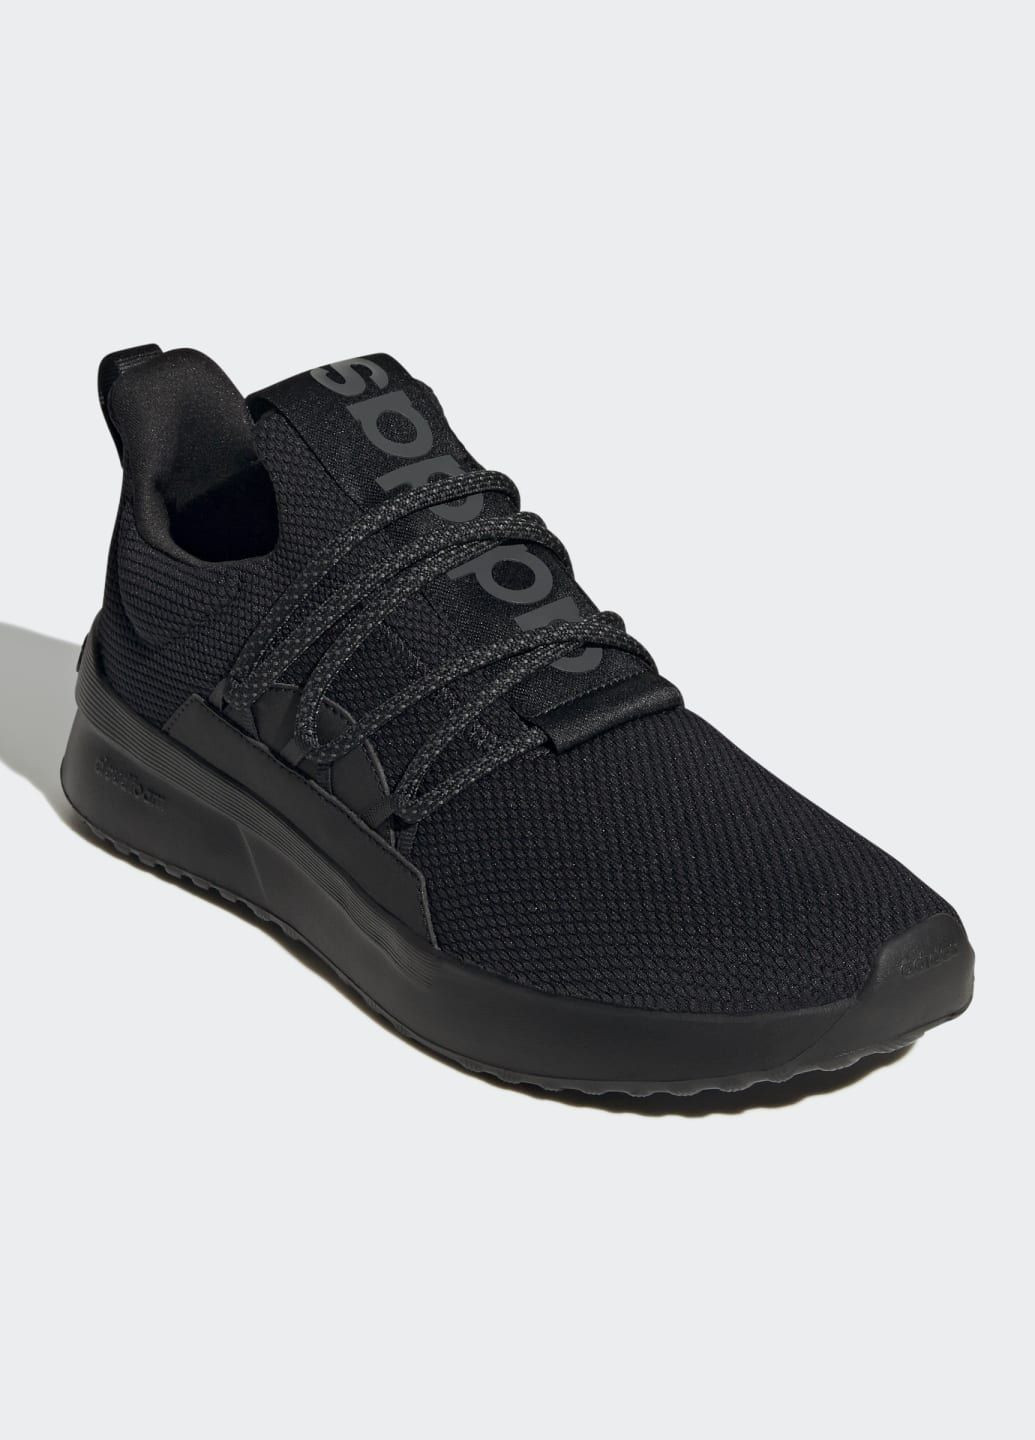 Чорні всесезон кросівки lite racer adapt 4.0 cloudfoam slip-on adidas